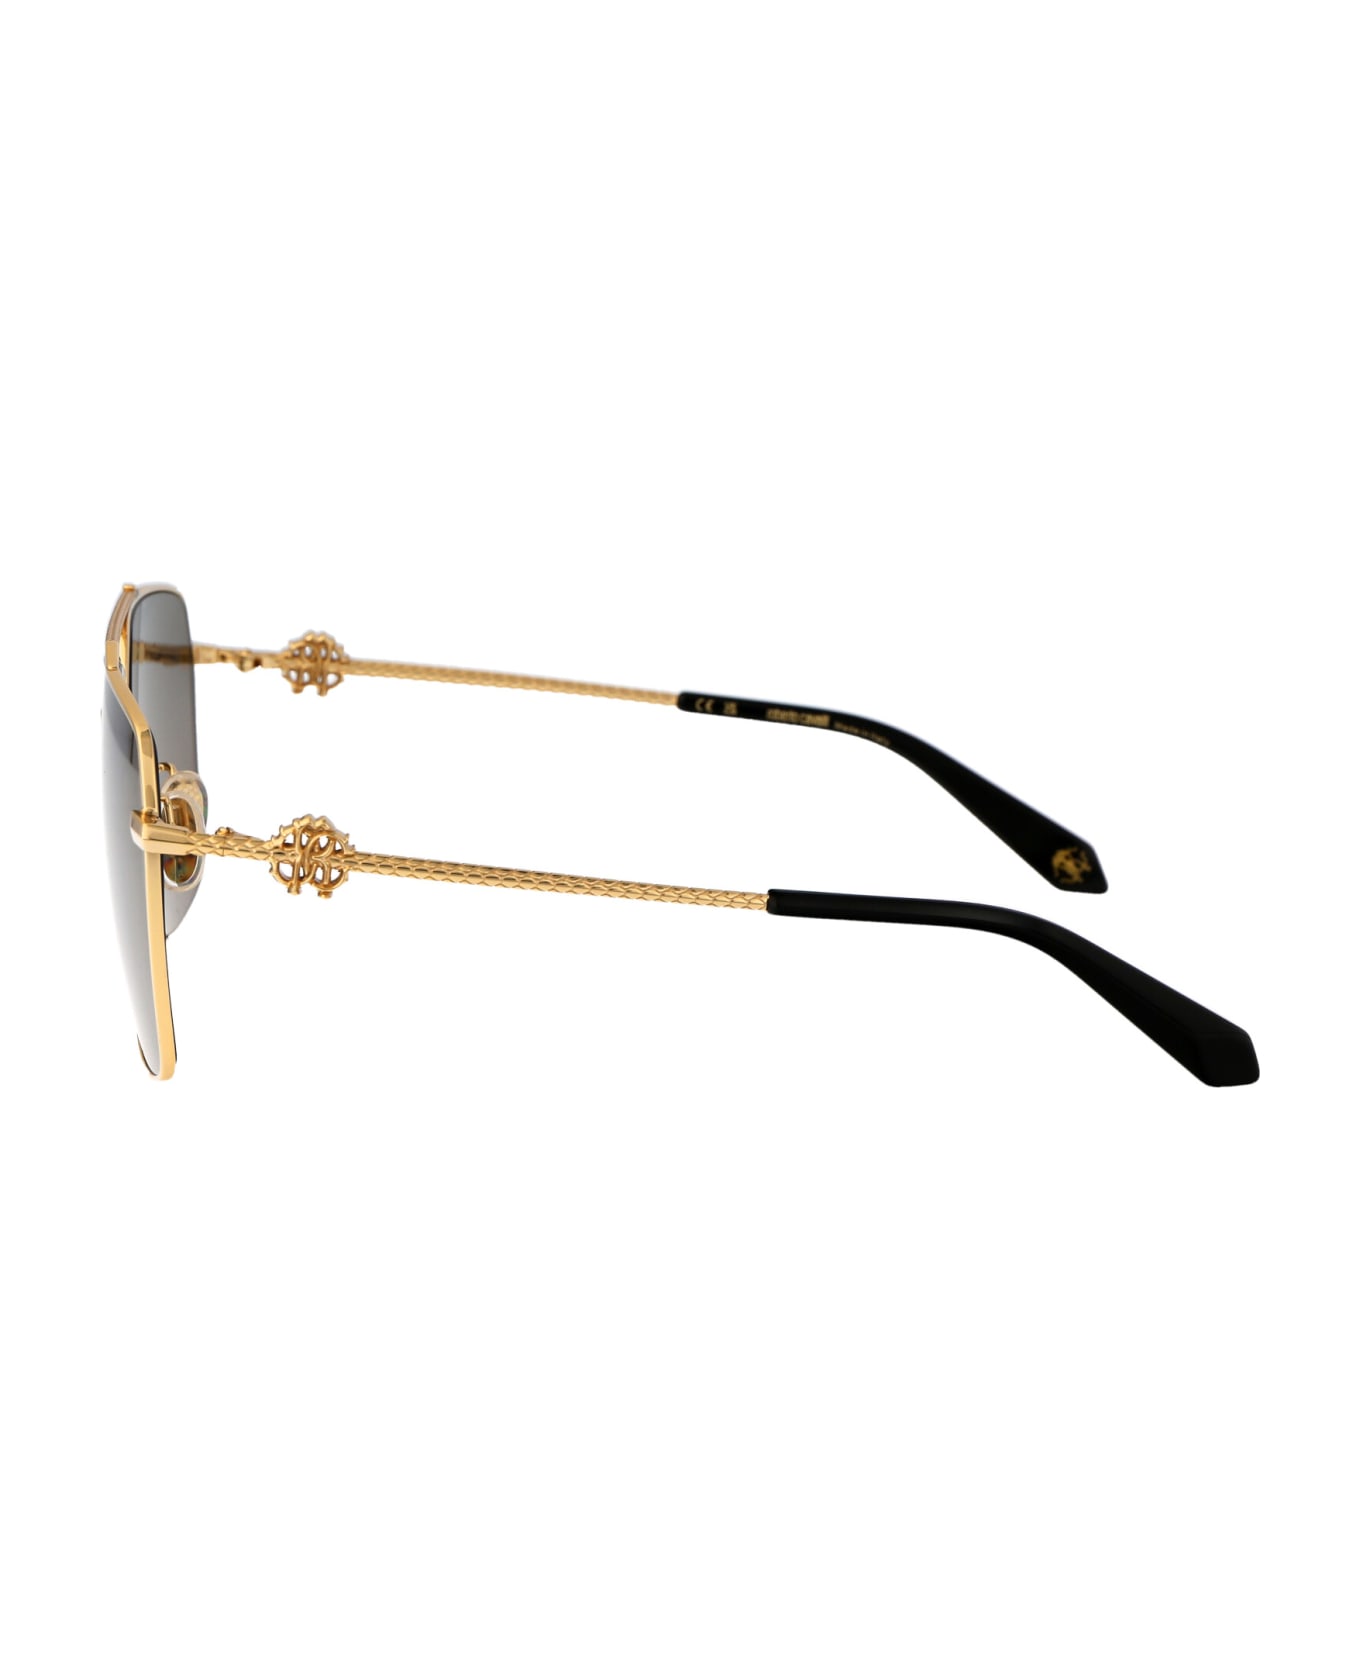 Roberto Cavalli Src036v Sunglasses - 400P GOLD サングラス